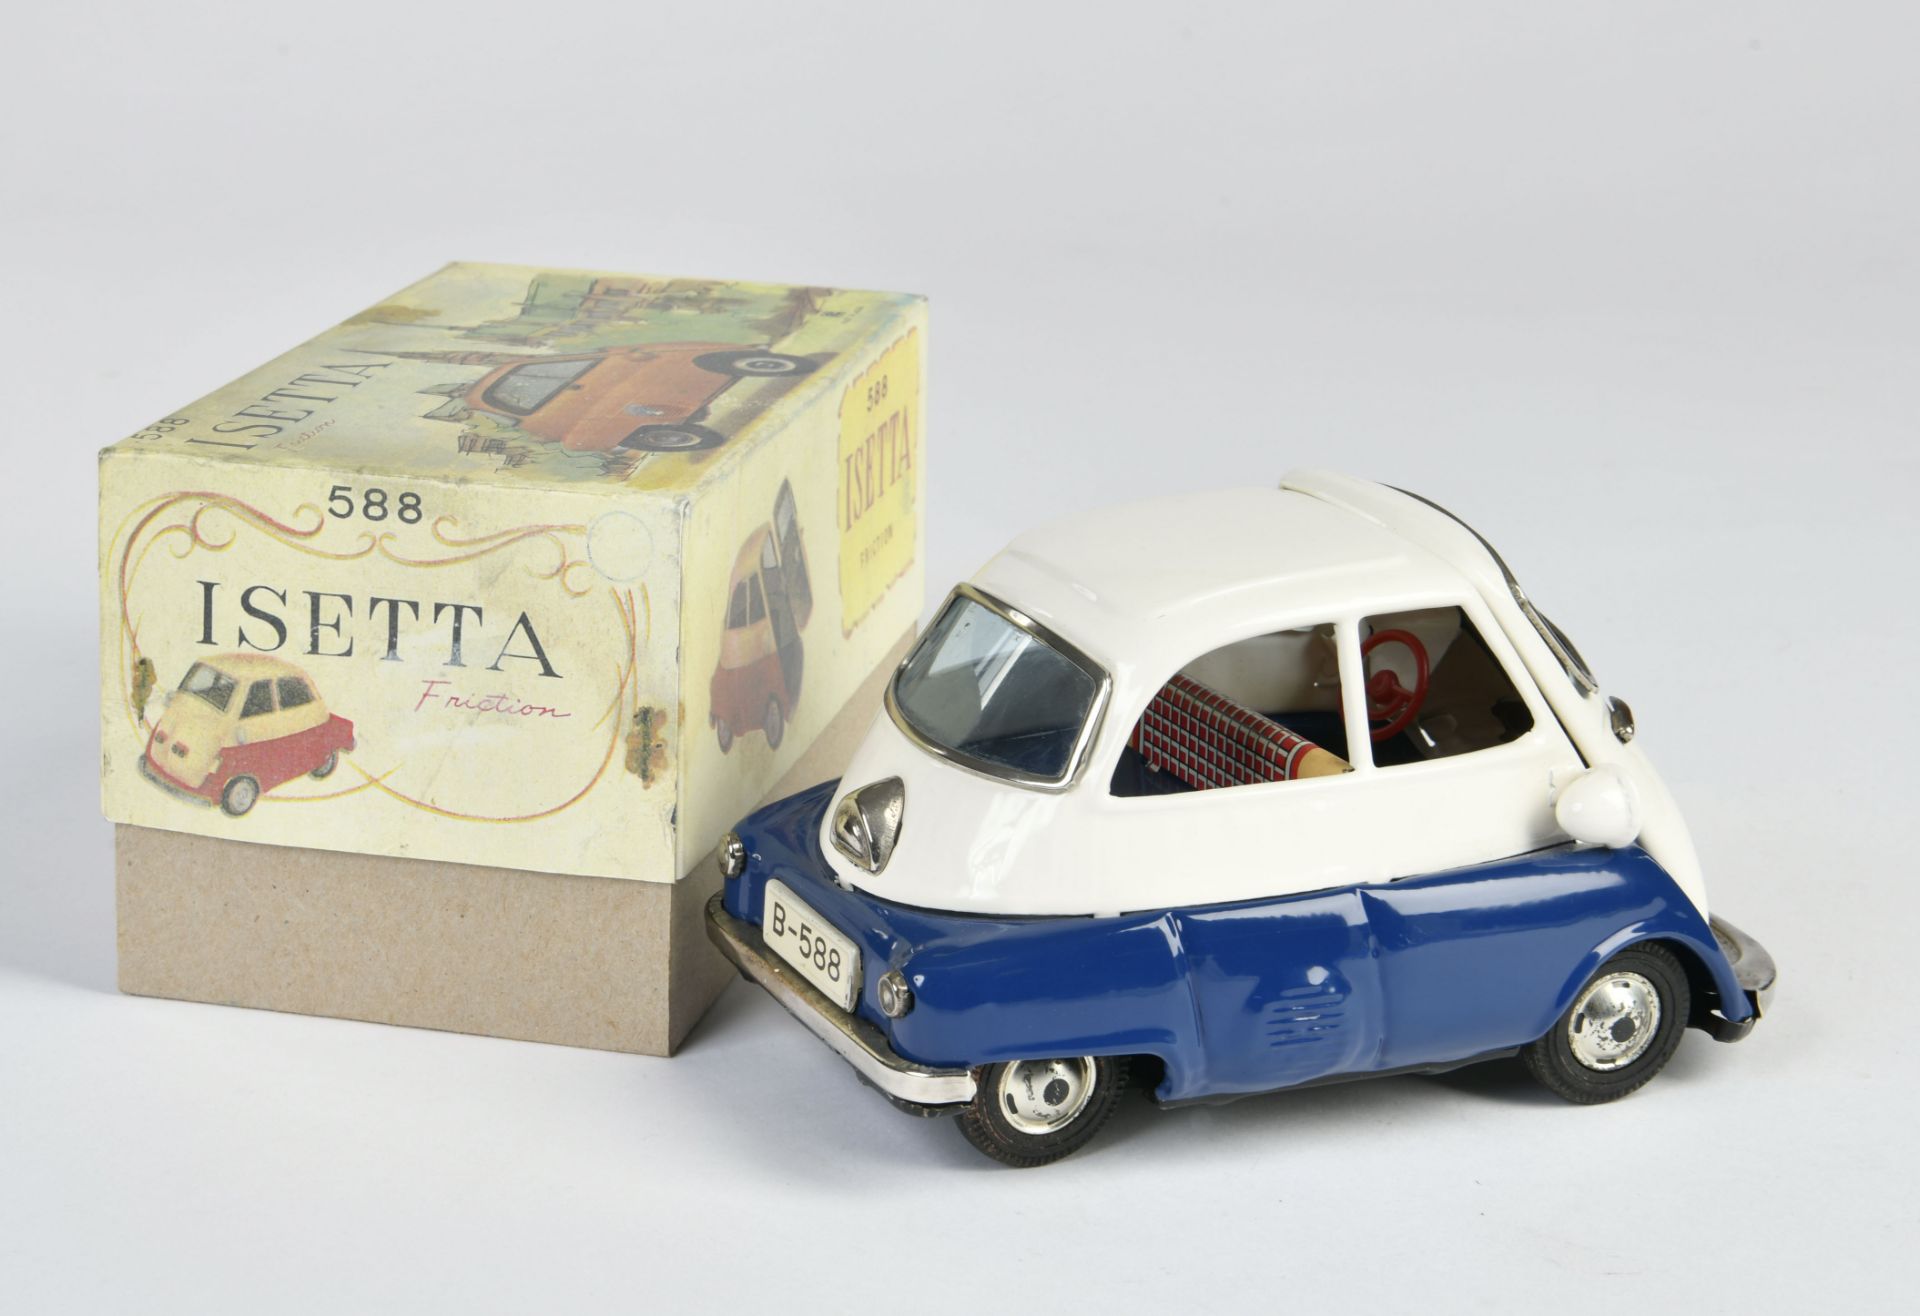 Bandai, Isetta, Japan, tin, friction ok, 18 cm, reprobox, min. paint d. on bottom plate, C 1- - Image 2 of 2